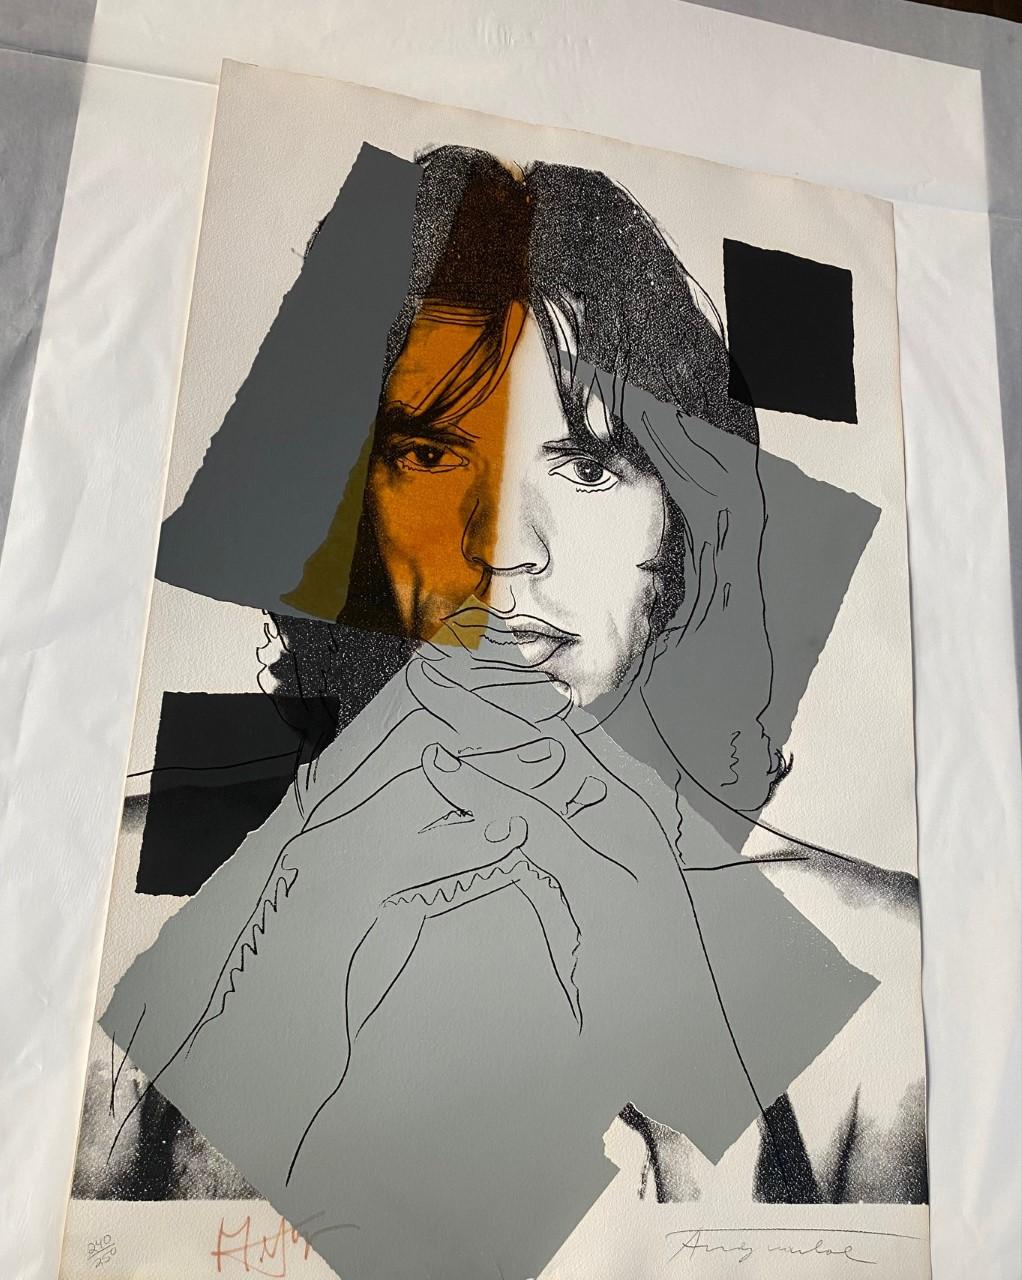 Mick Jagger F&S II.147 - Beige Print by Andy Warhol